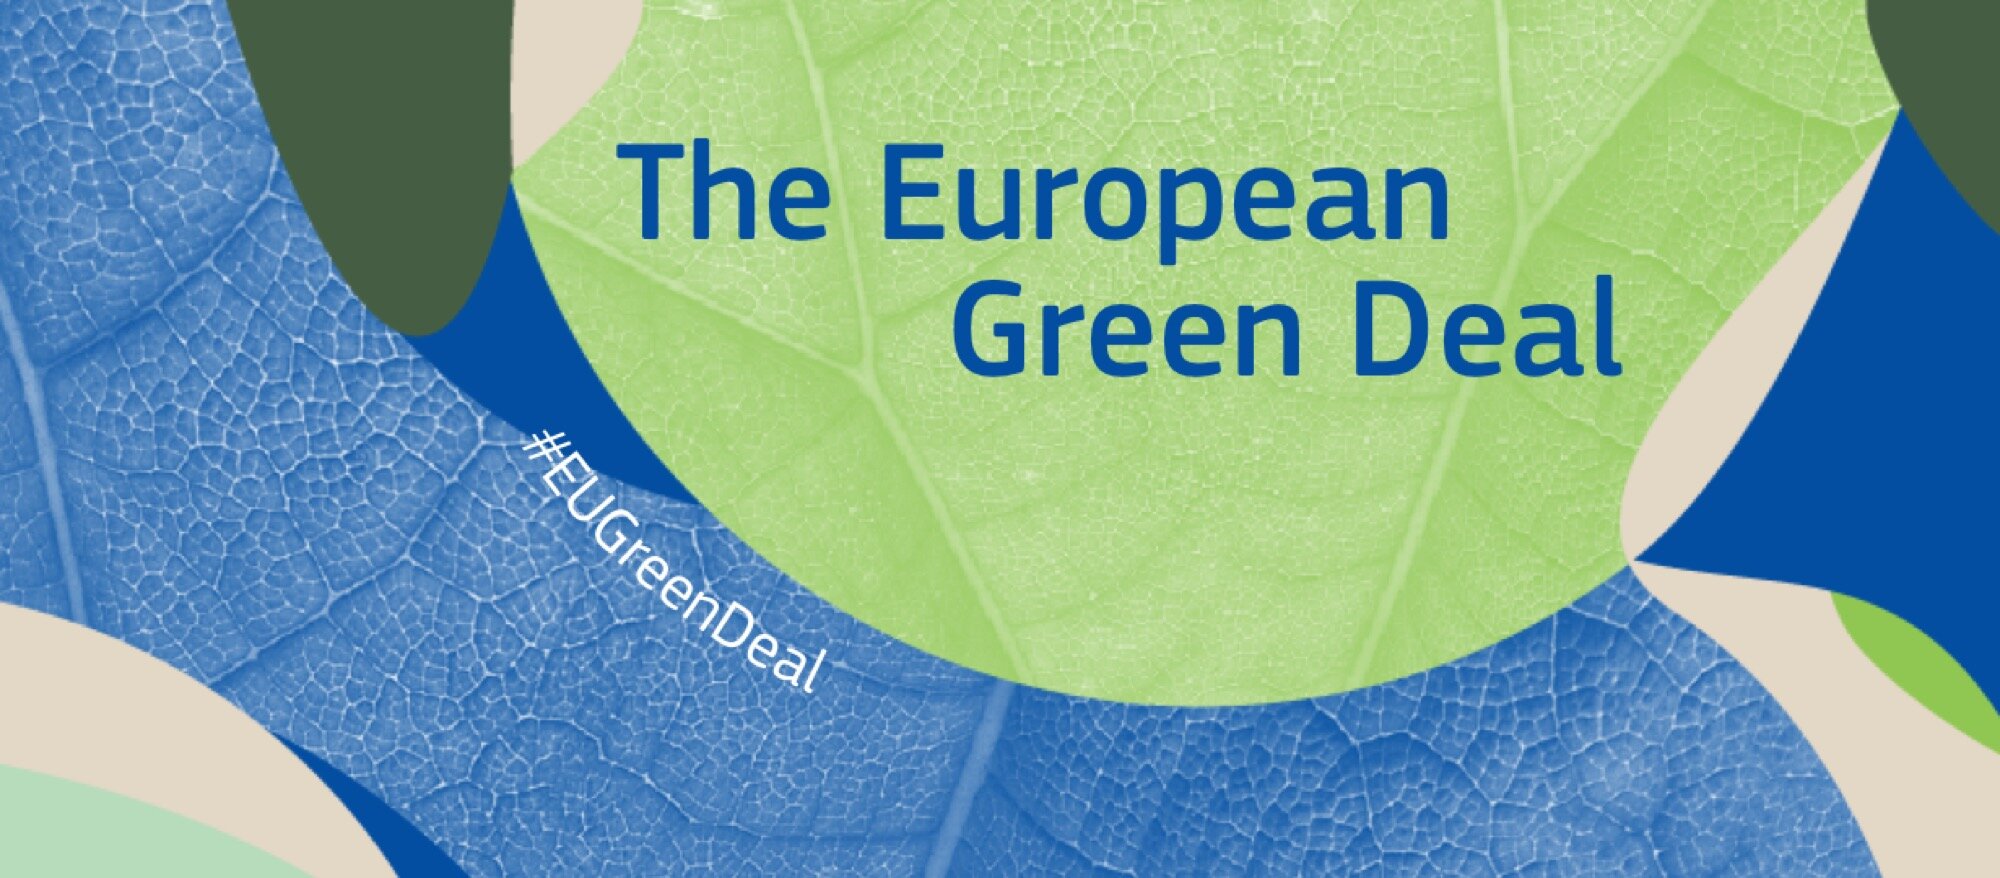 More information about "Ευρωπαϊκή Πράσινη Συμφωνία: Αυστηρότερα πρότυπα εκπομπών CO2 για αυτοκίνητα και ημιφορτηγά"